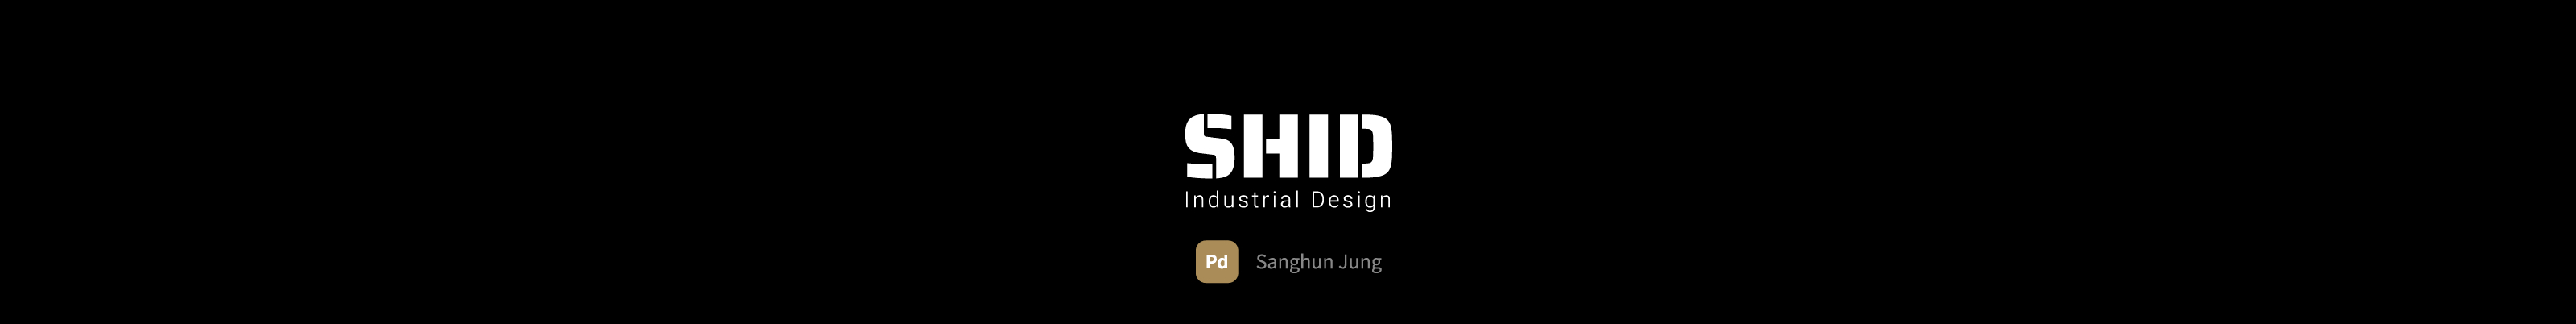 Sanghun Jung's profile banner